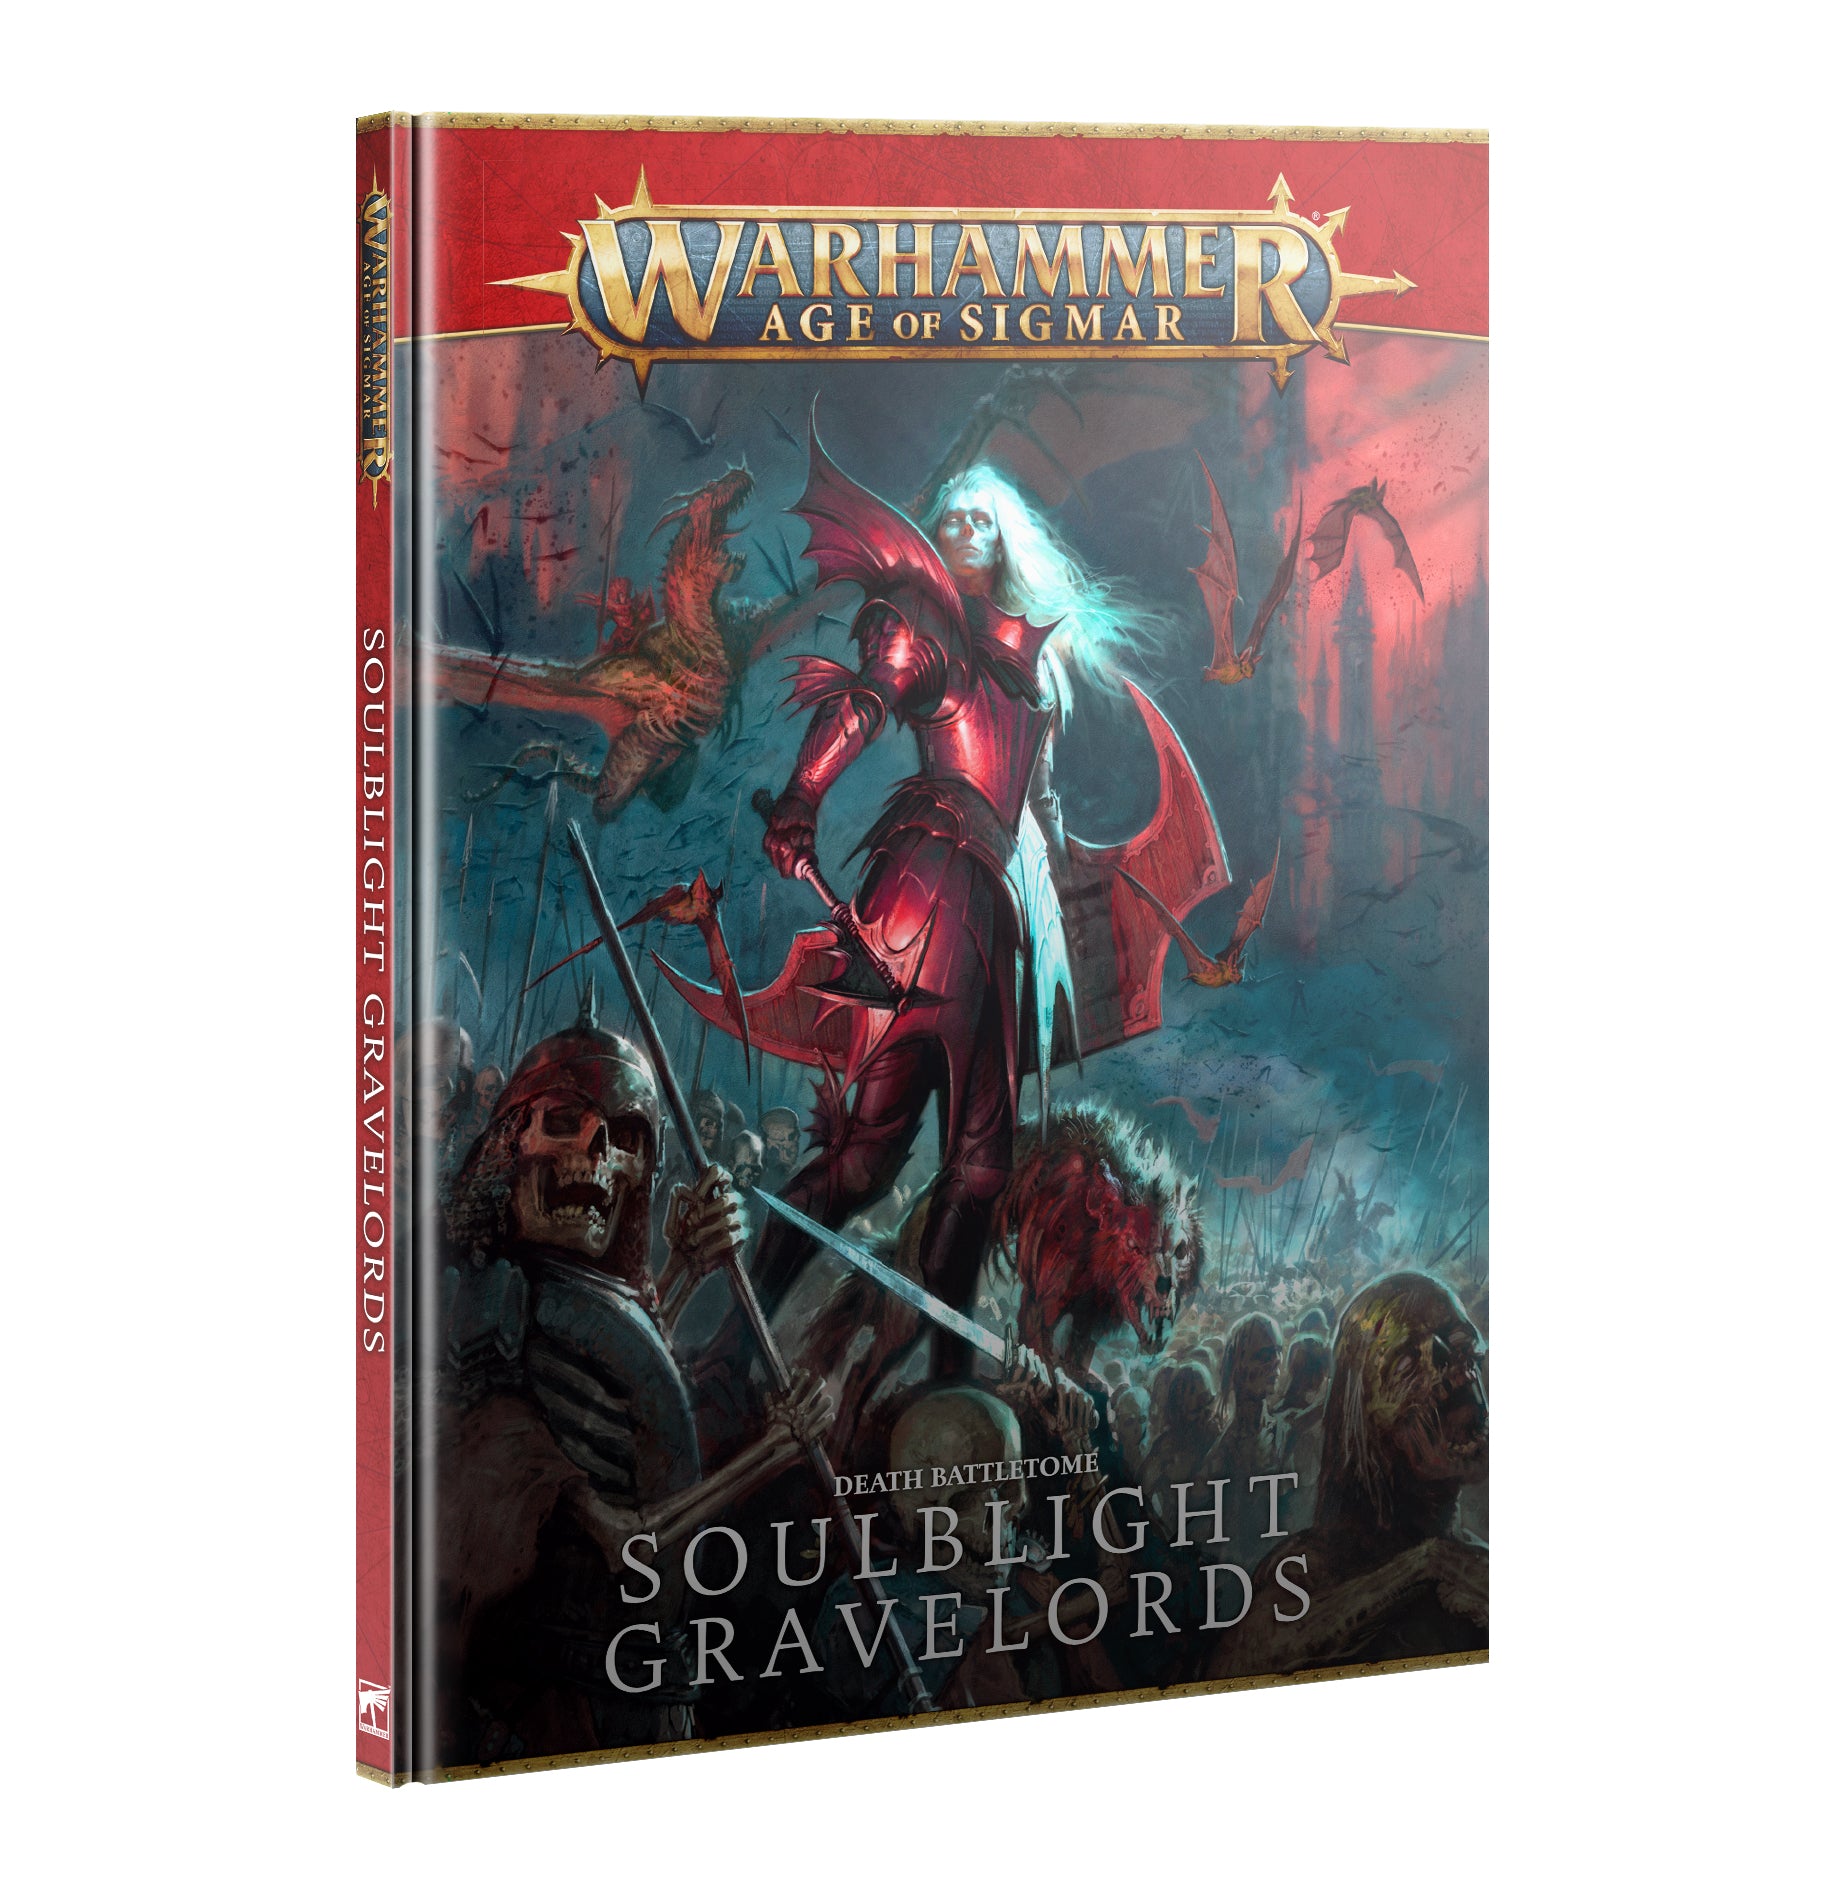 Warhammer Age of Sigmar Battletome Soulblight Gravelords MKDFVQSXQ5 |0|